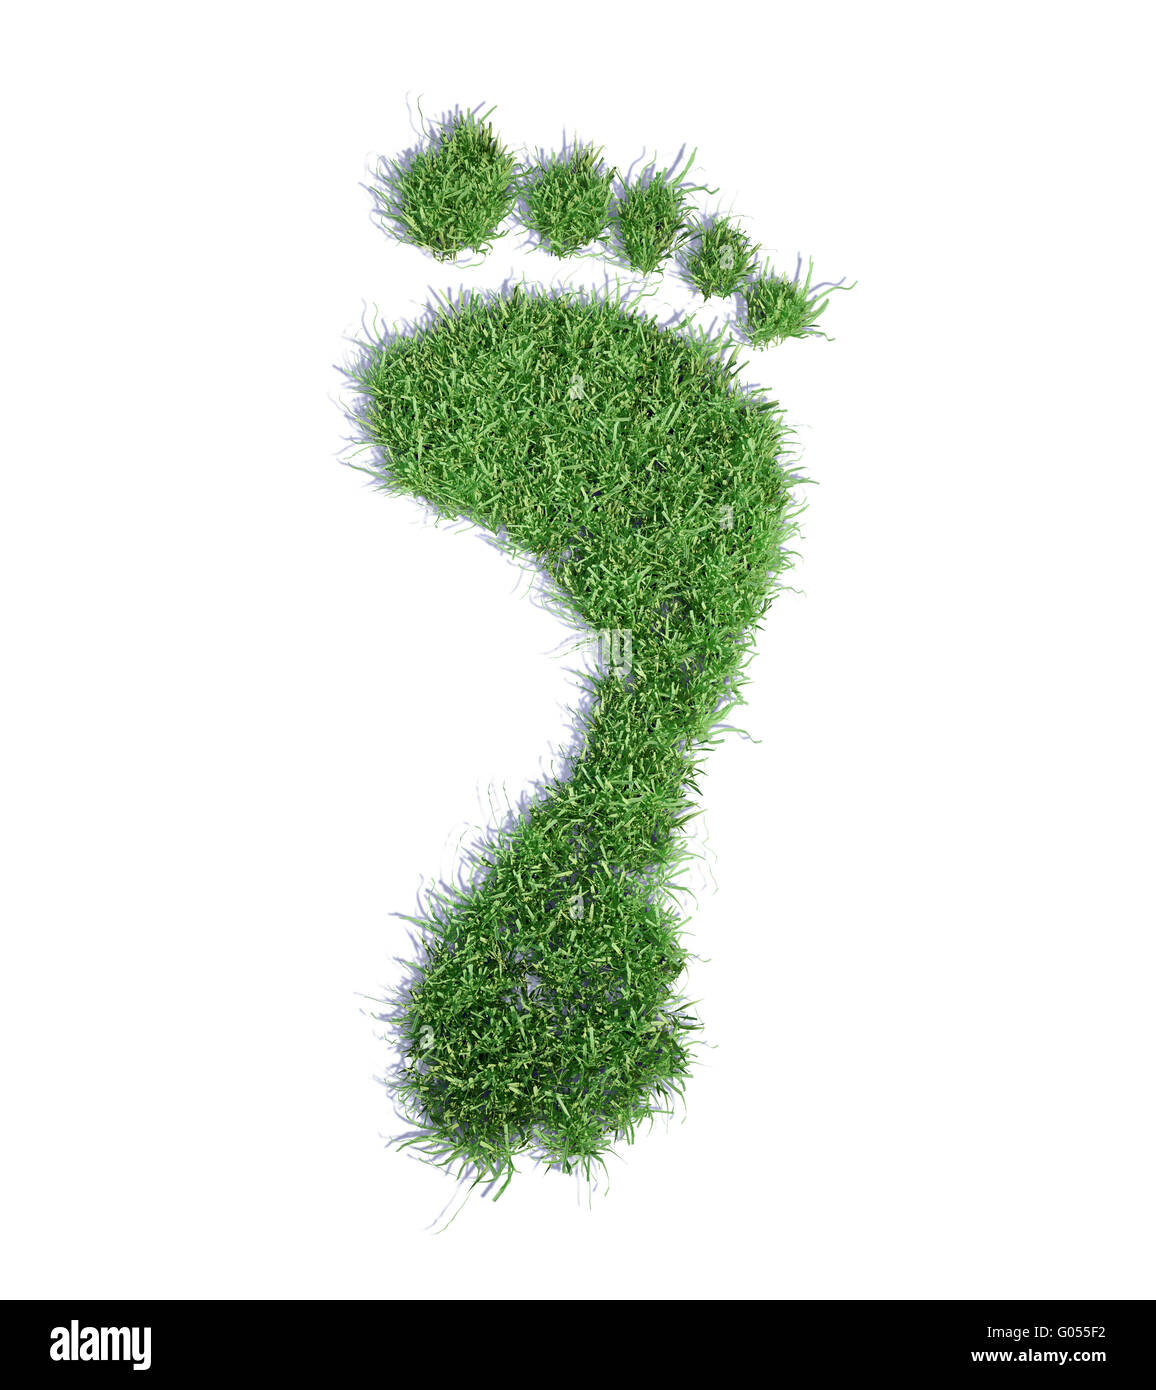 Ecological footprint concept illustration - grass patch footprint Stock Photo